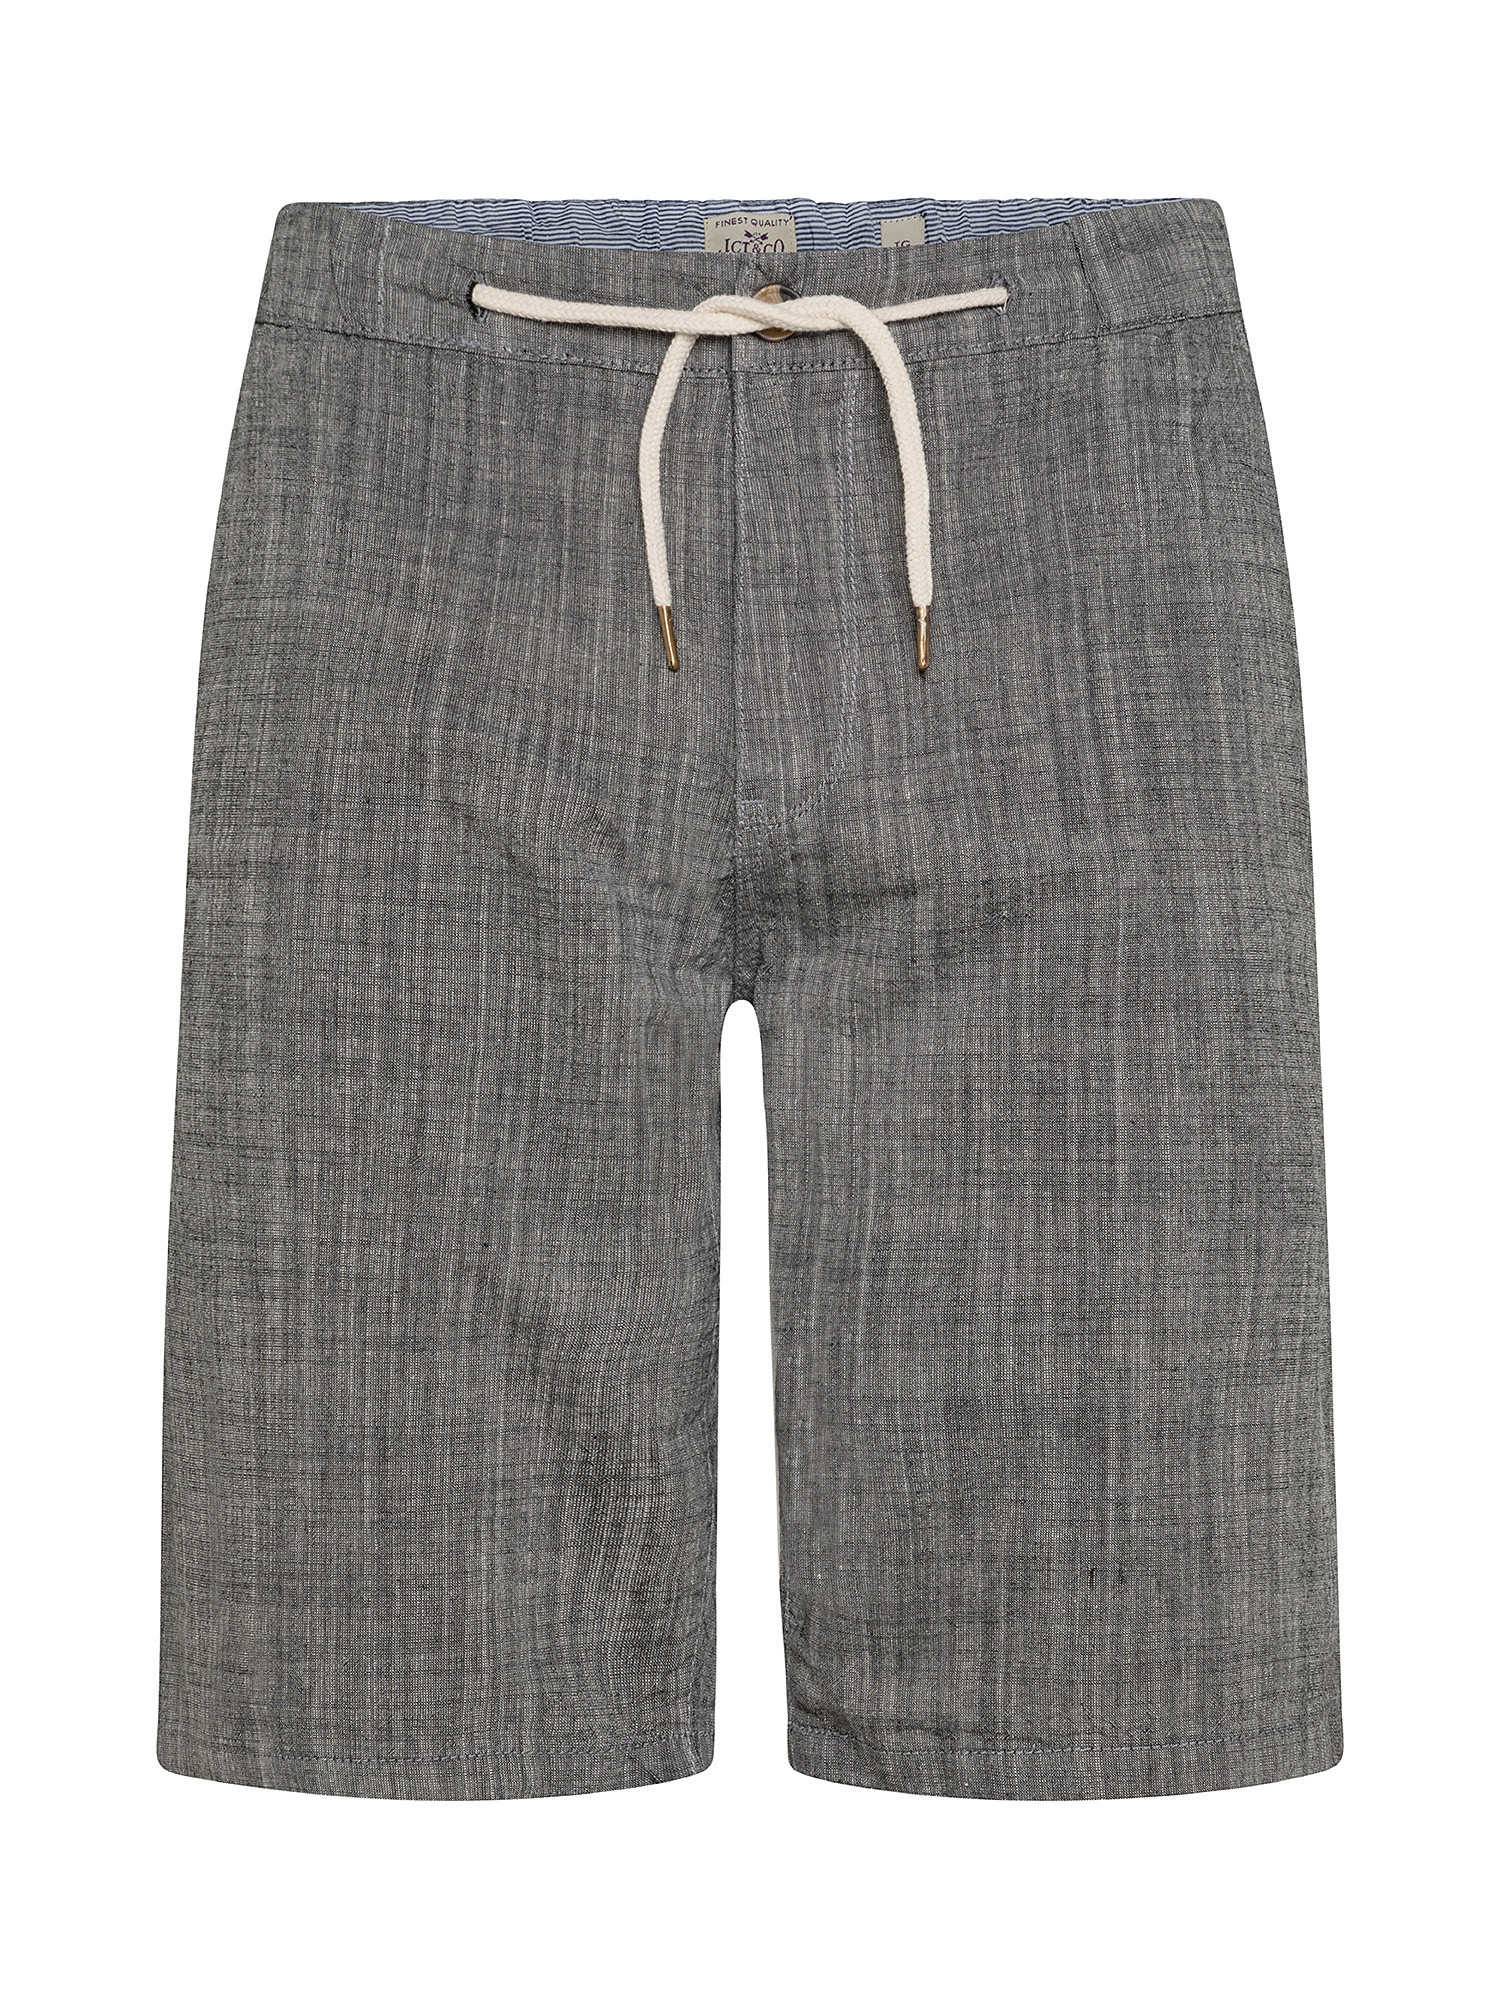 Bermuda shorts with drawstring at the waist, Grey, large image number 0